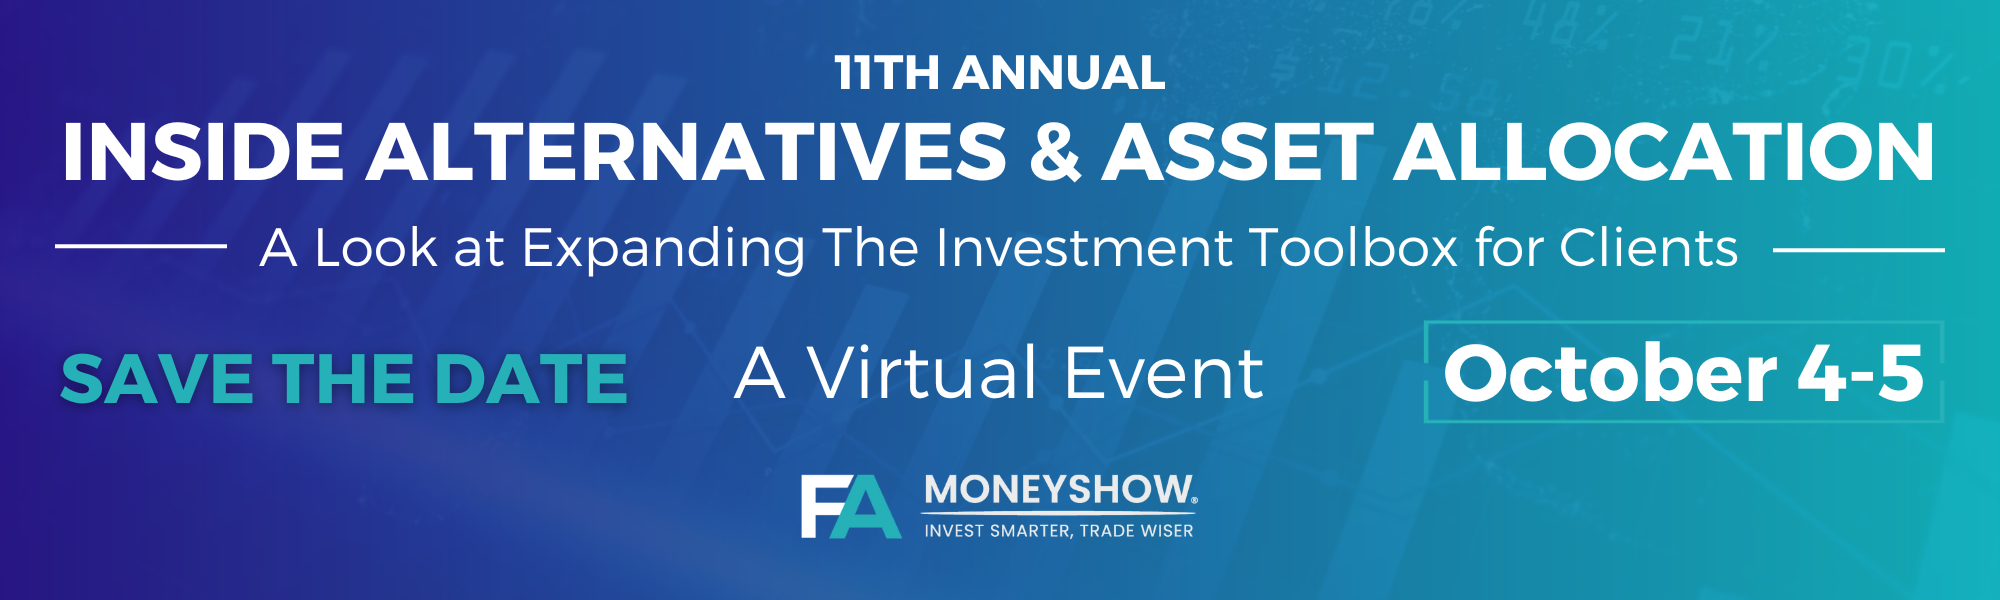 11th annual Inside Alternatives & Asset Allocation